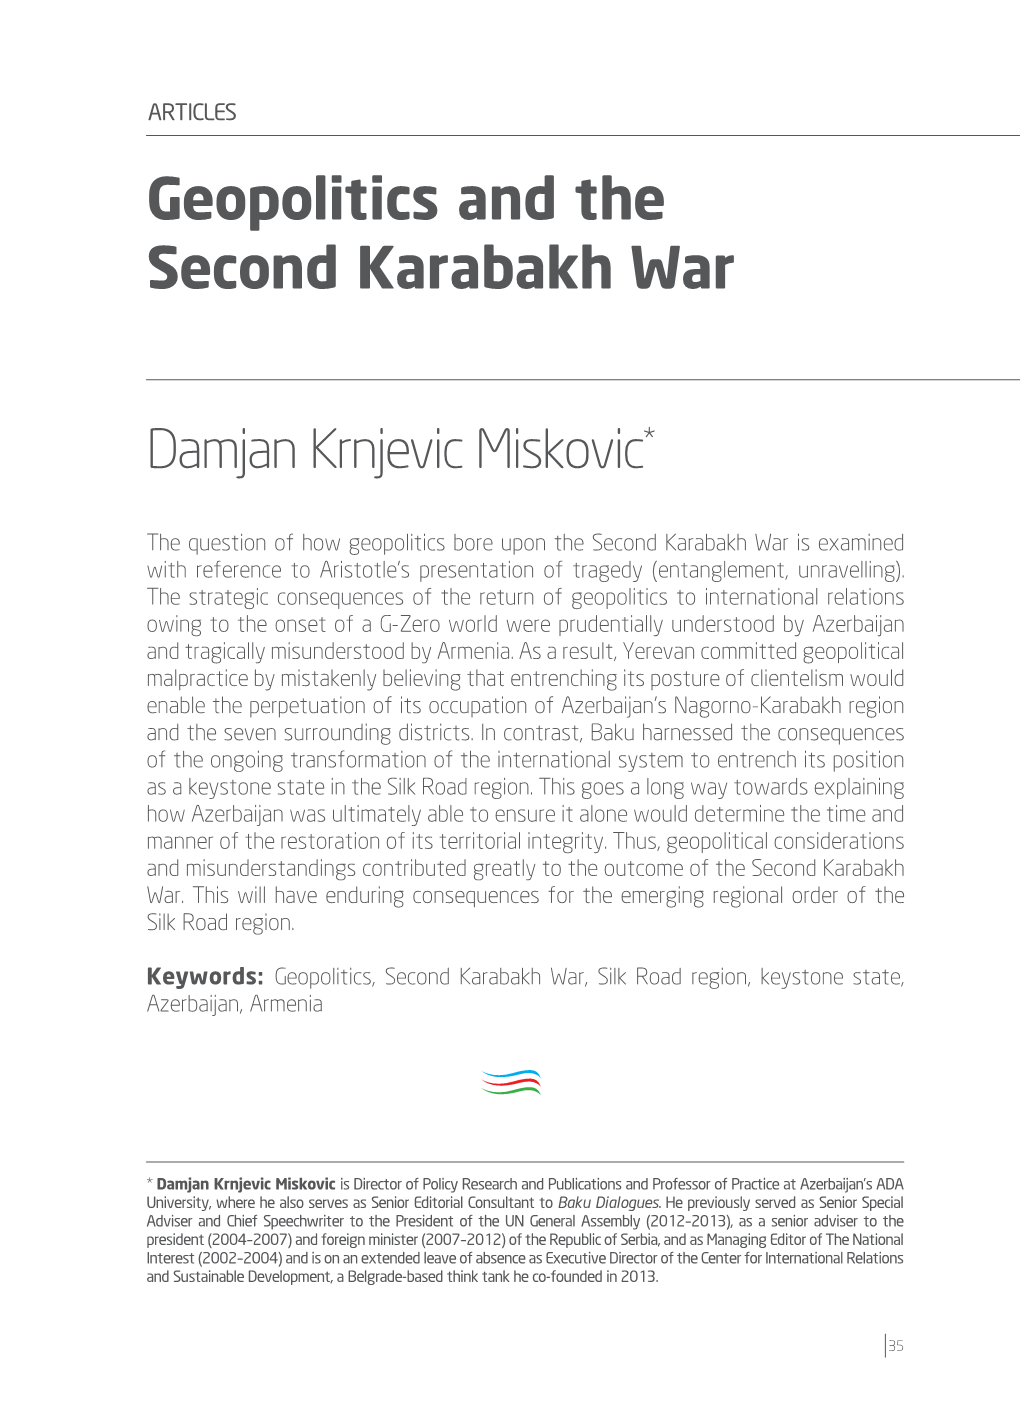 Geopolitics and the Second Karabakh War